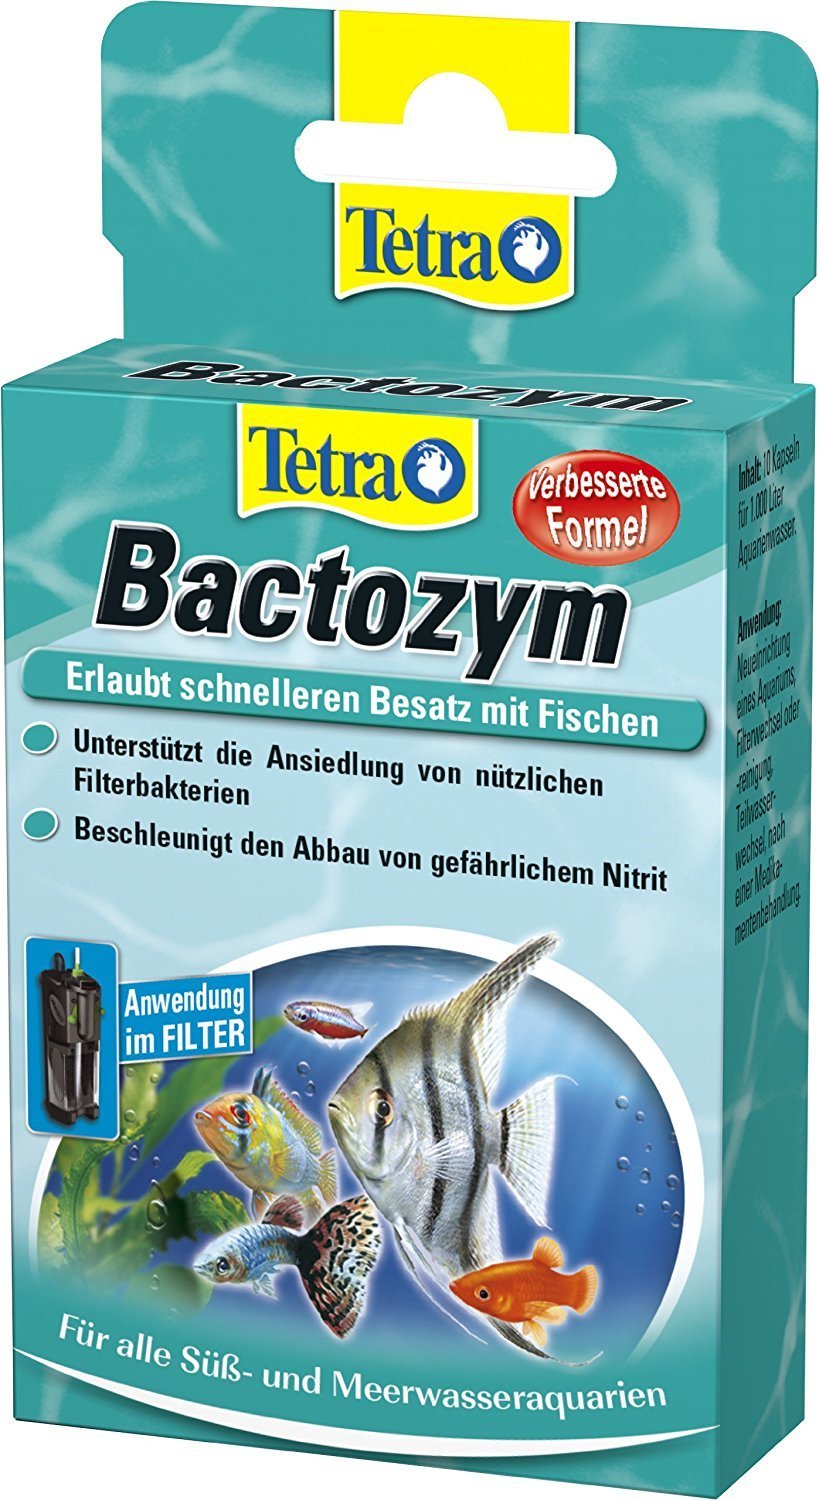 Tetra Bactozym capsule